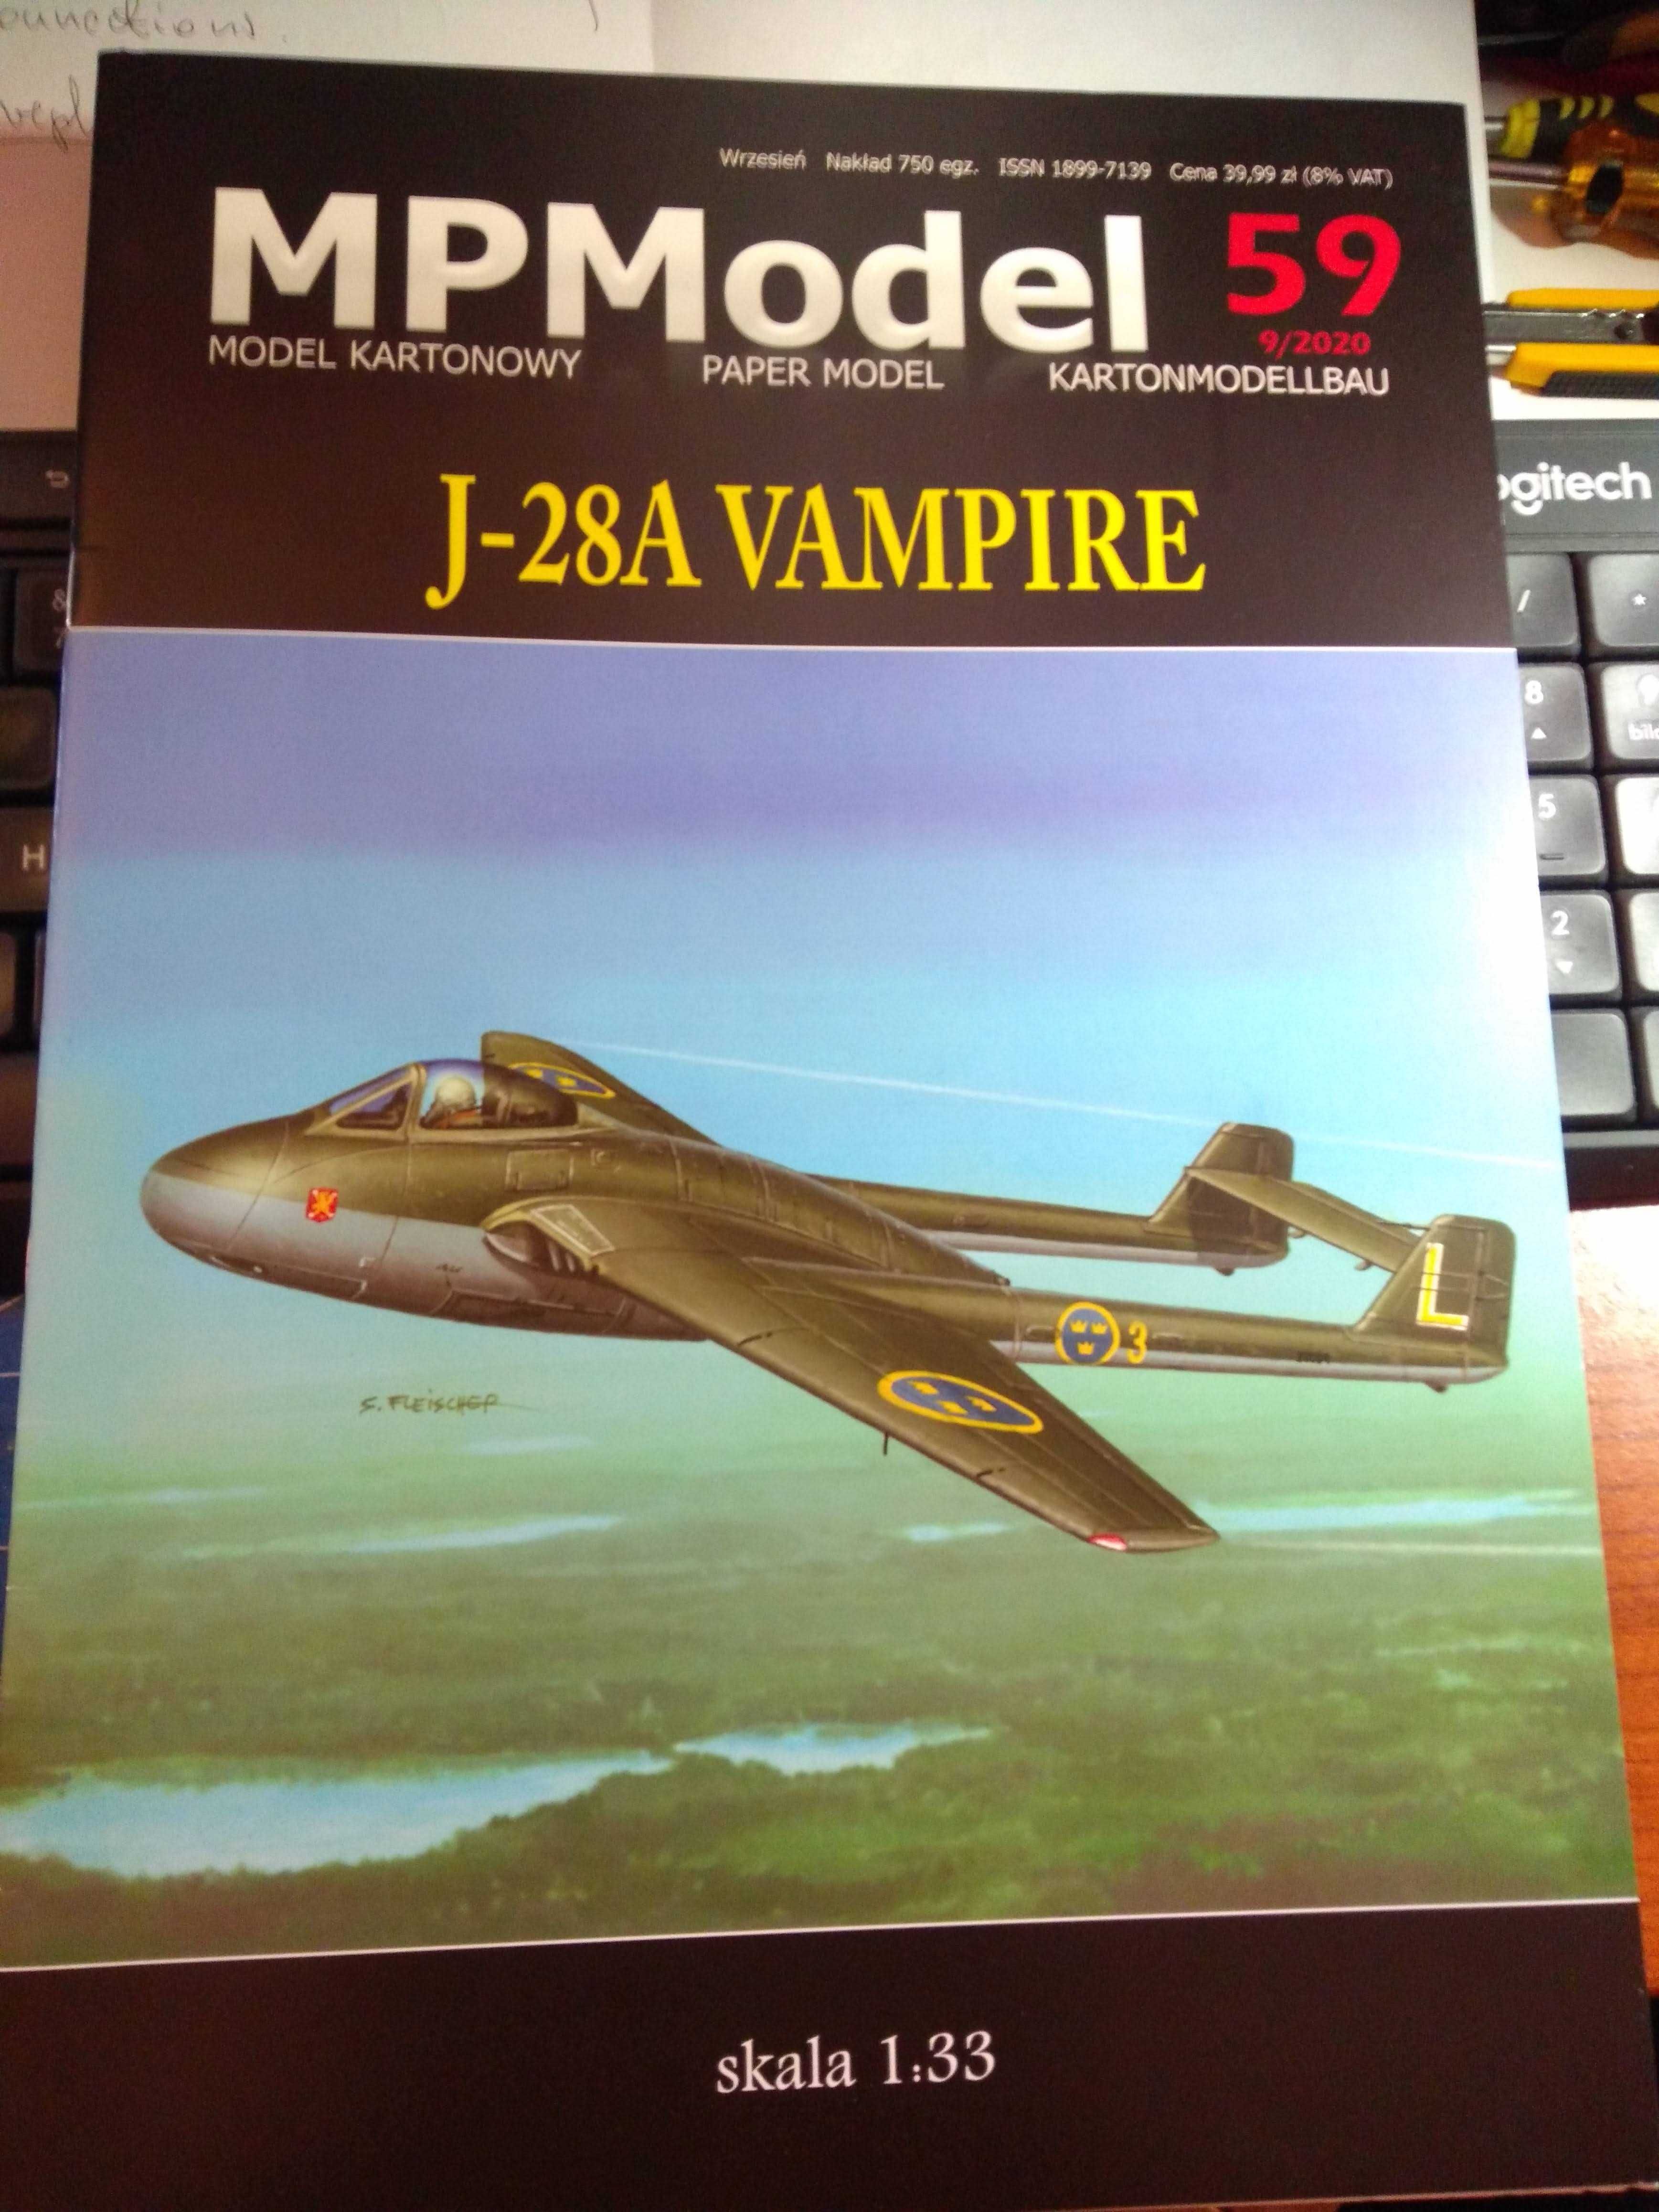 Model kartonowy MPModel samolot J-28A Vampire